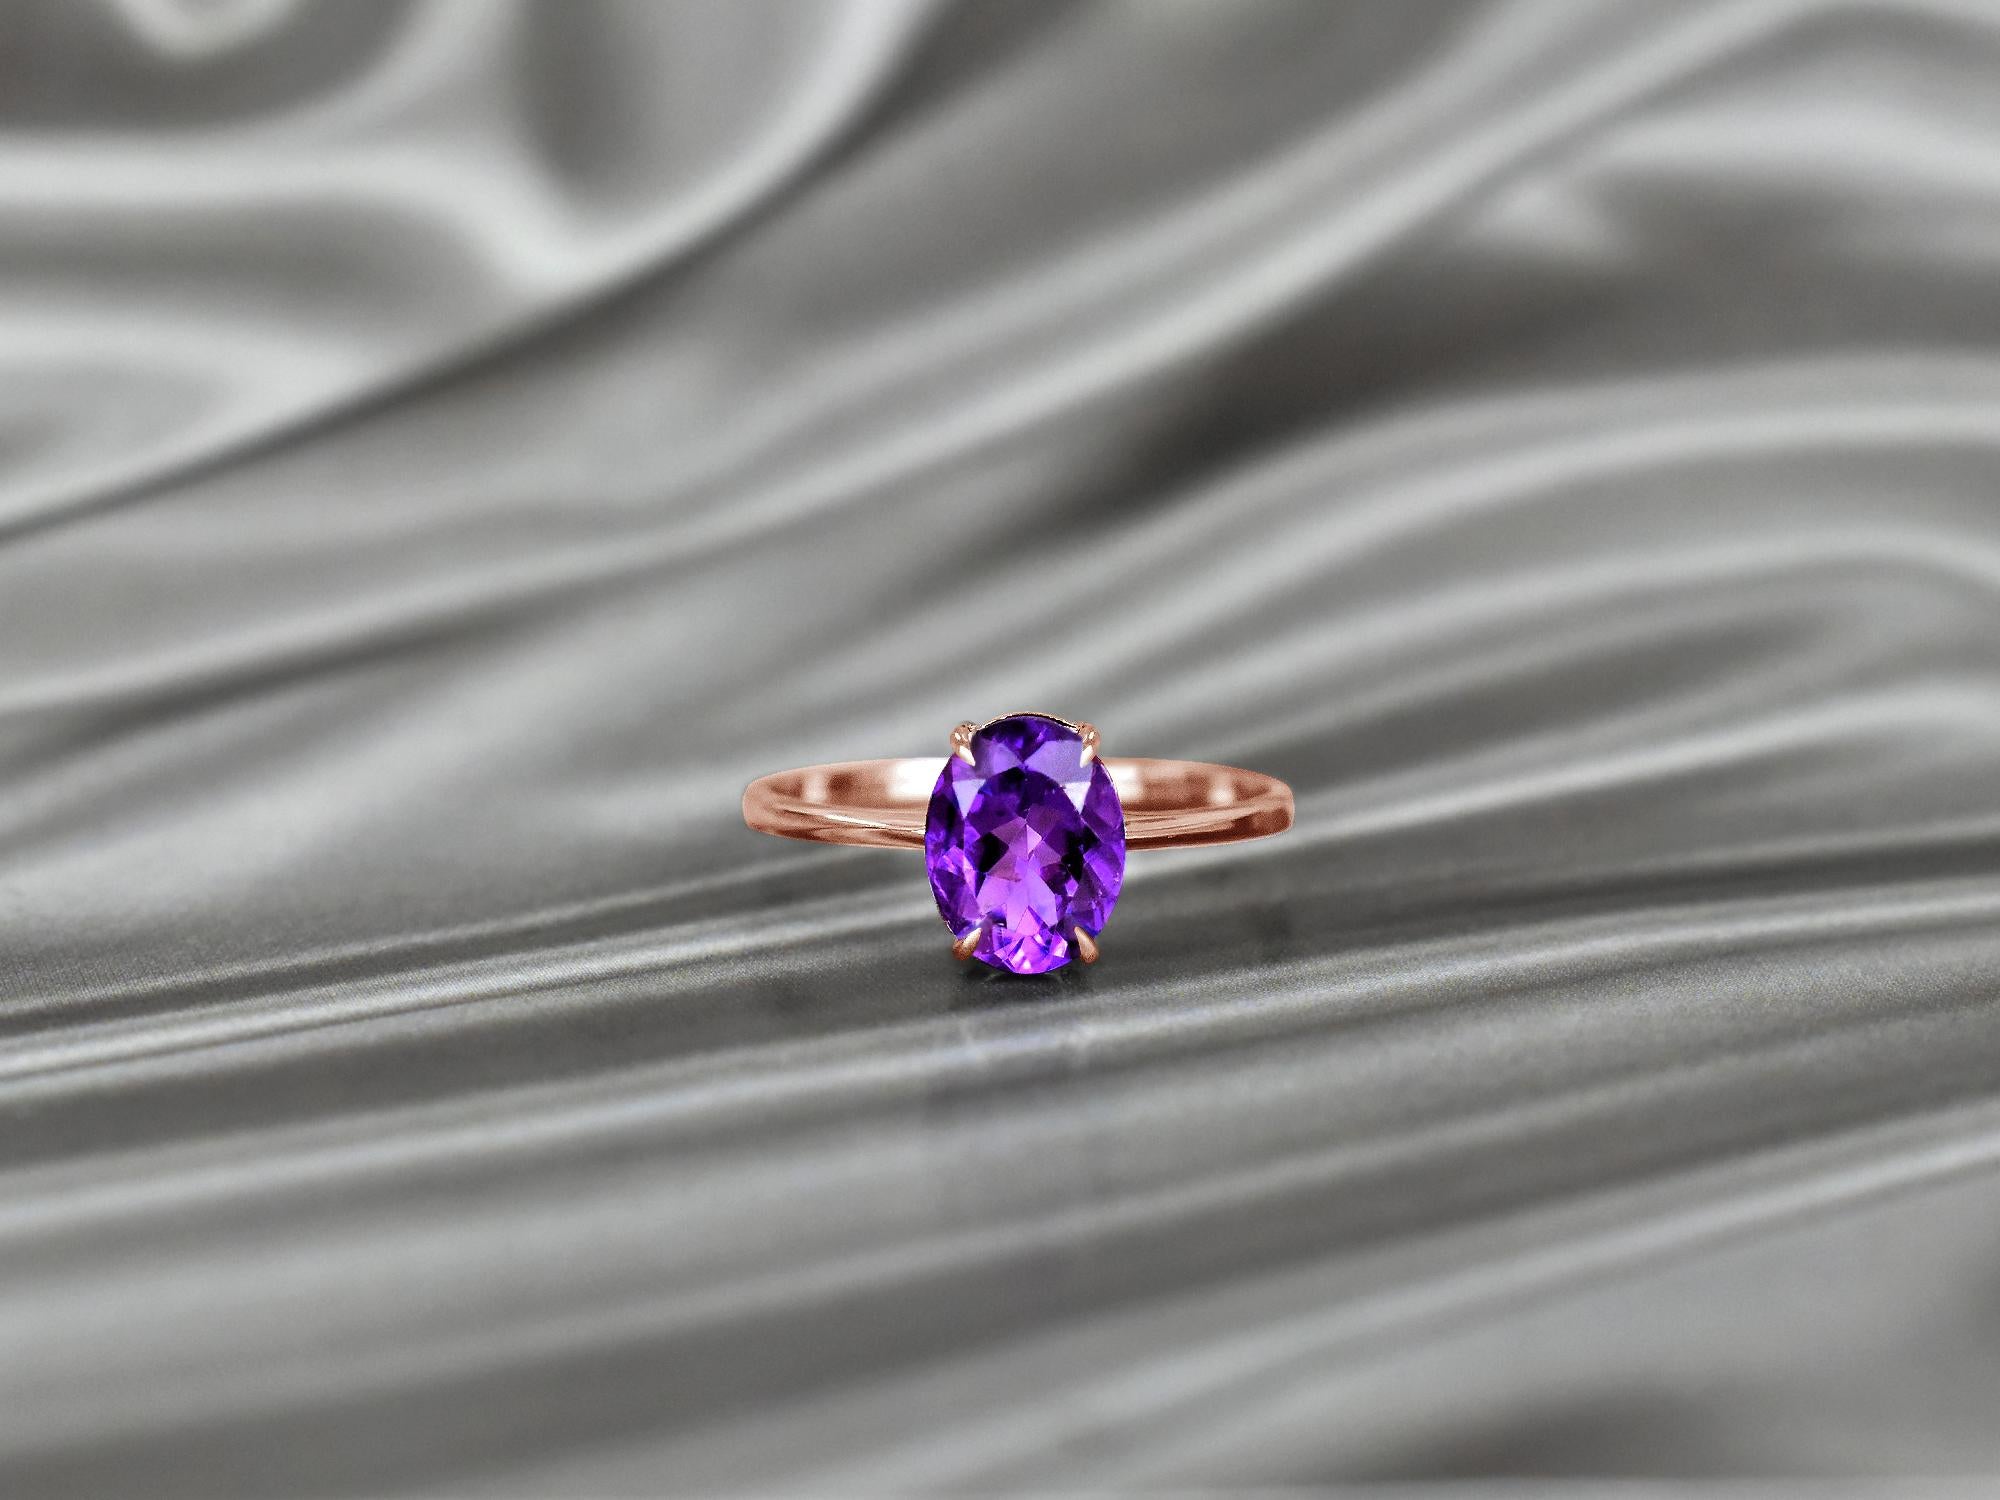 For Sale:  14k Gold Oval Gemstone 9x7 mm Oval Cut Gemstone Ring Gemstone Engagement Ring 2